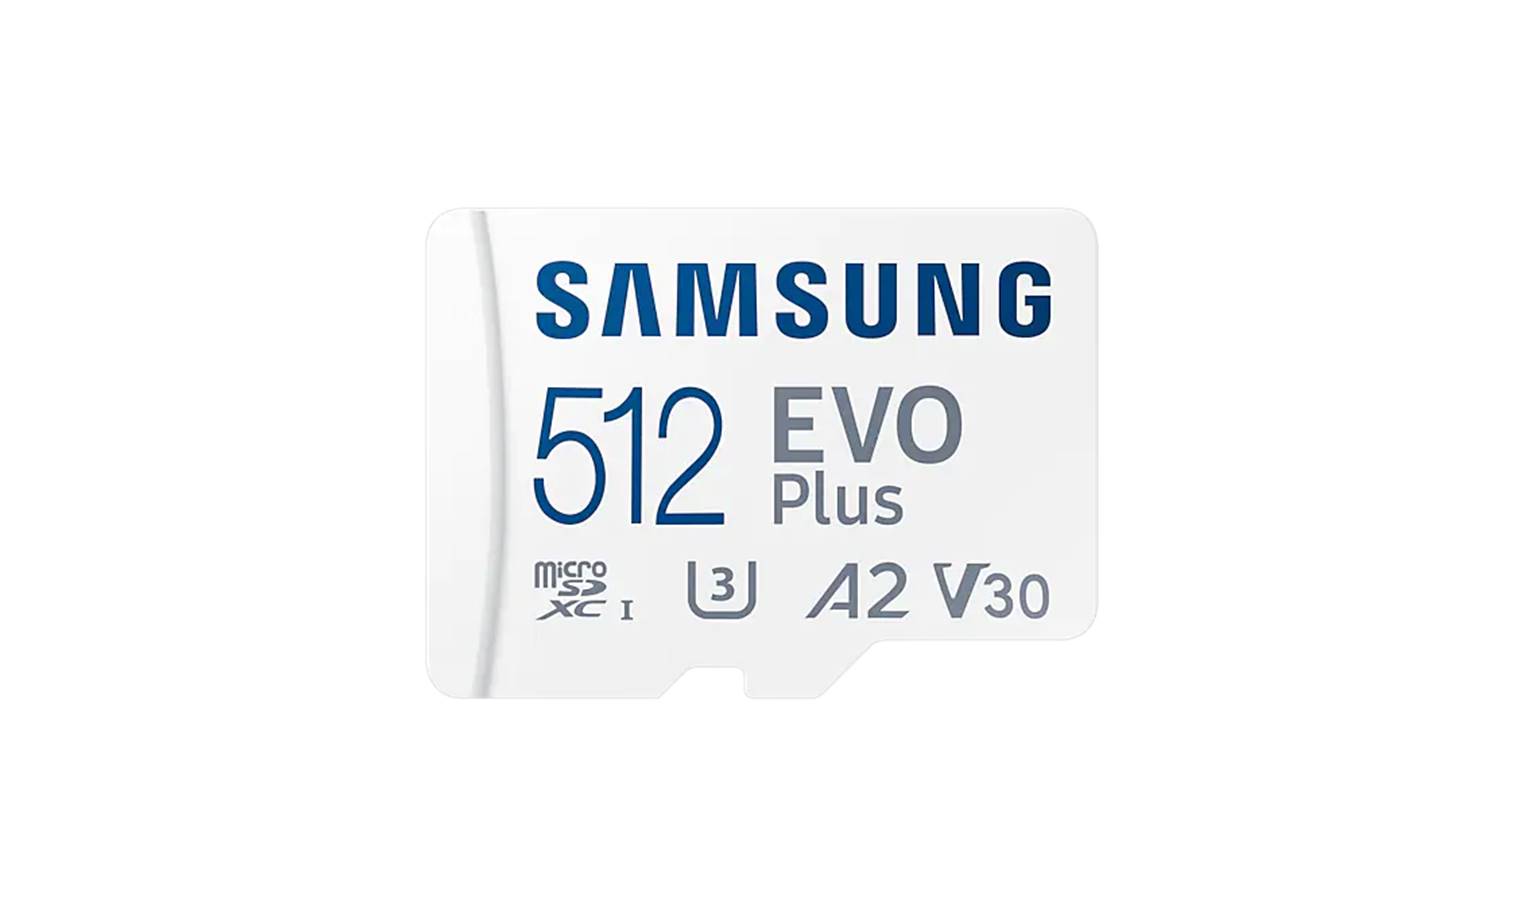 Micro Samsung 128gb Evo Plus